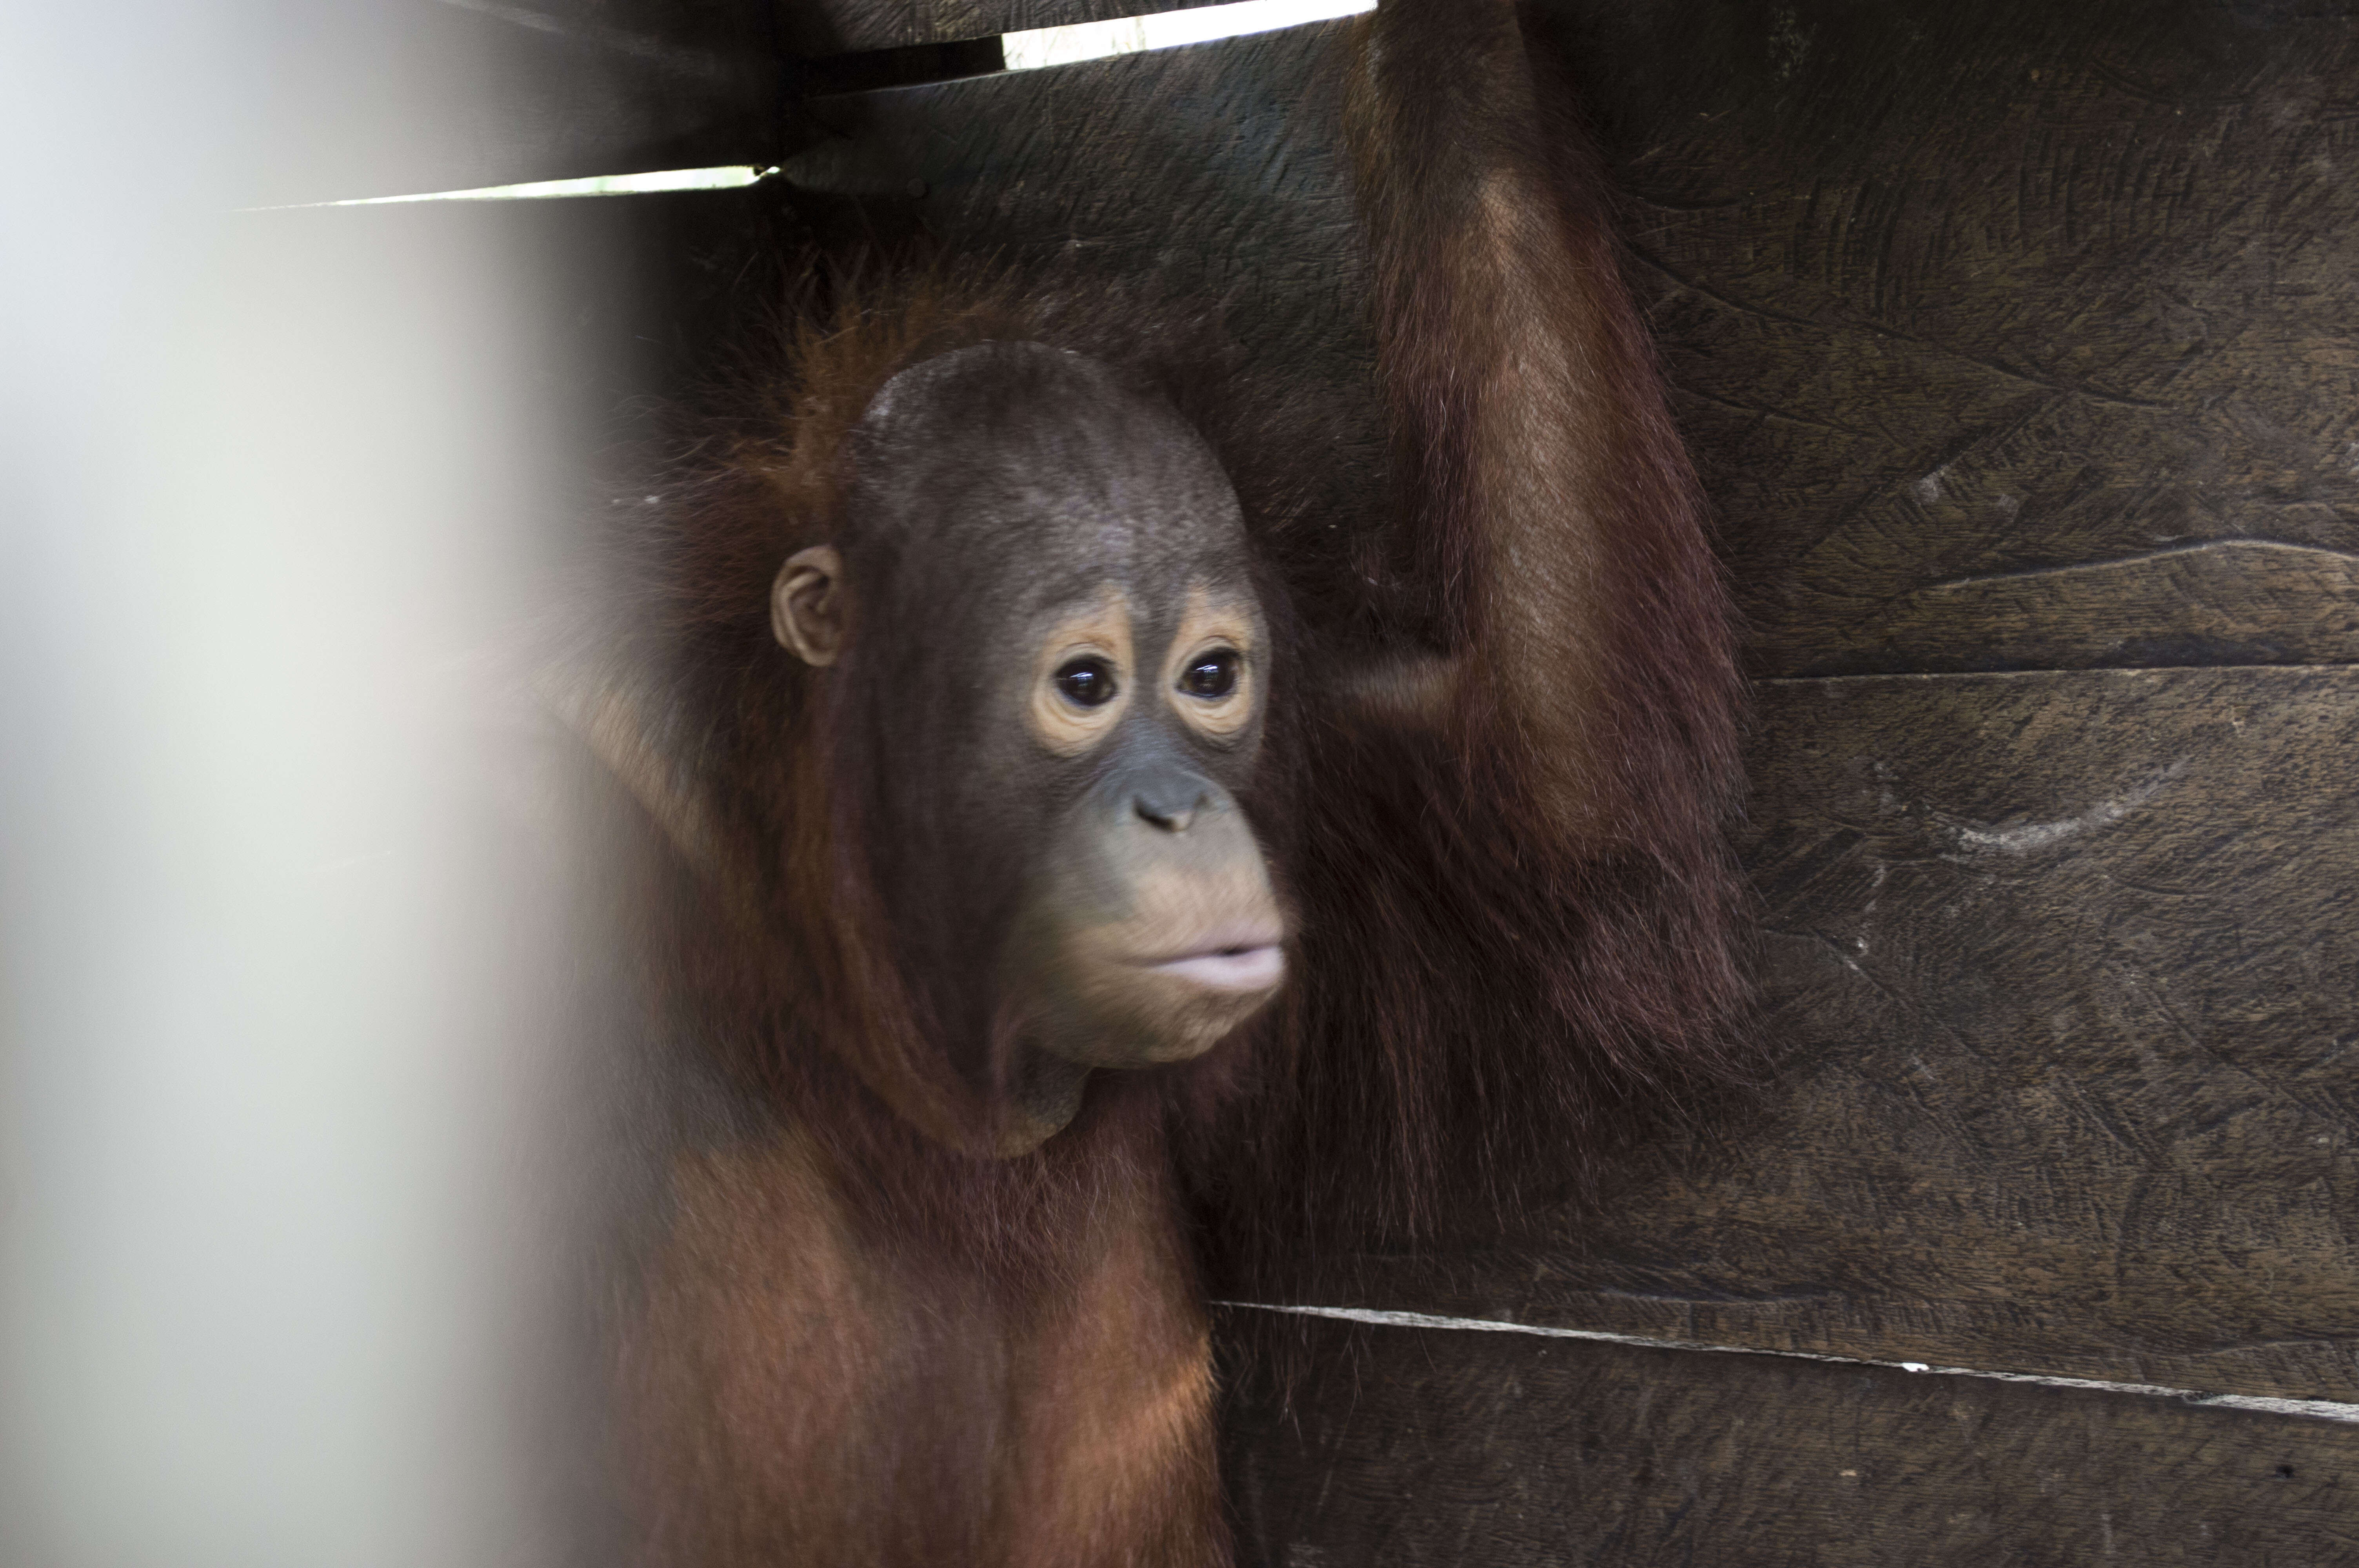 Young orangutan locked up in box